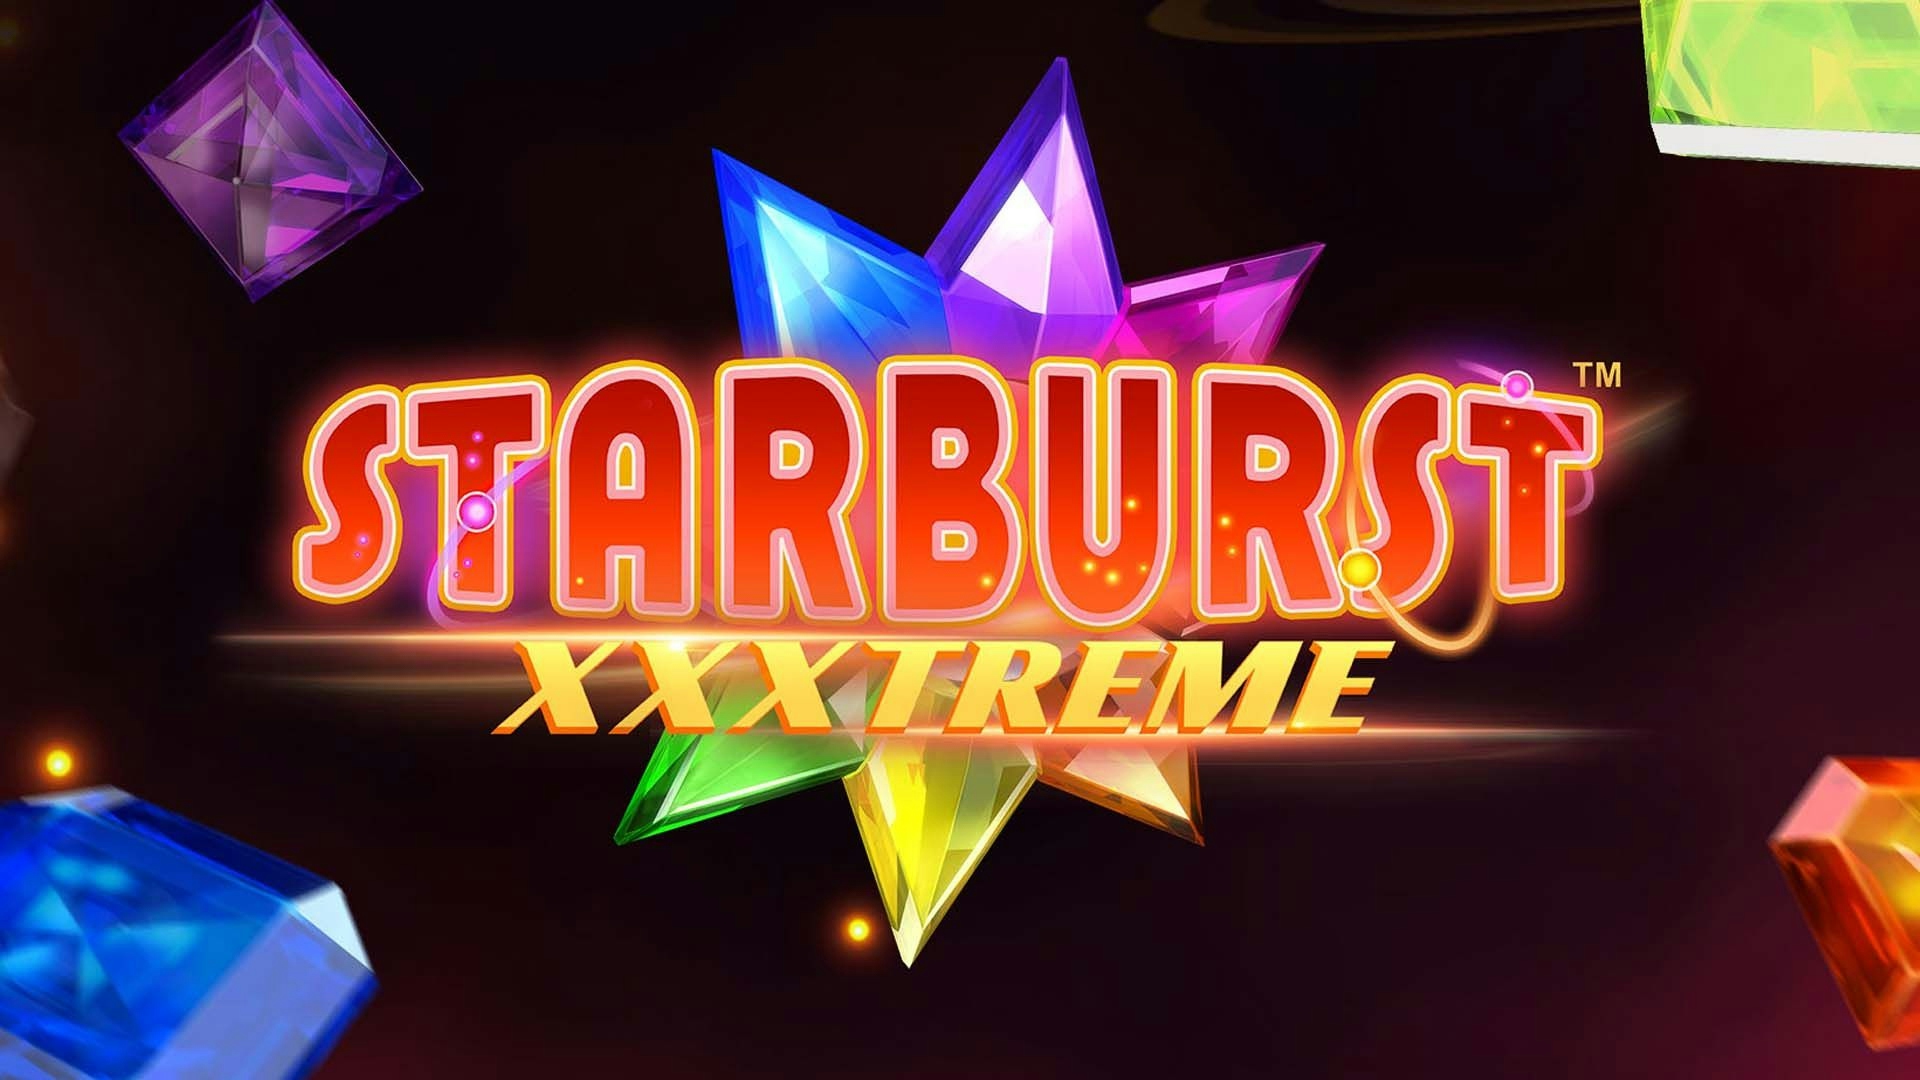 Starburst Extreme